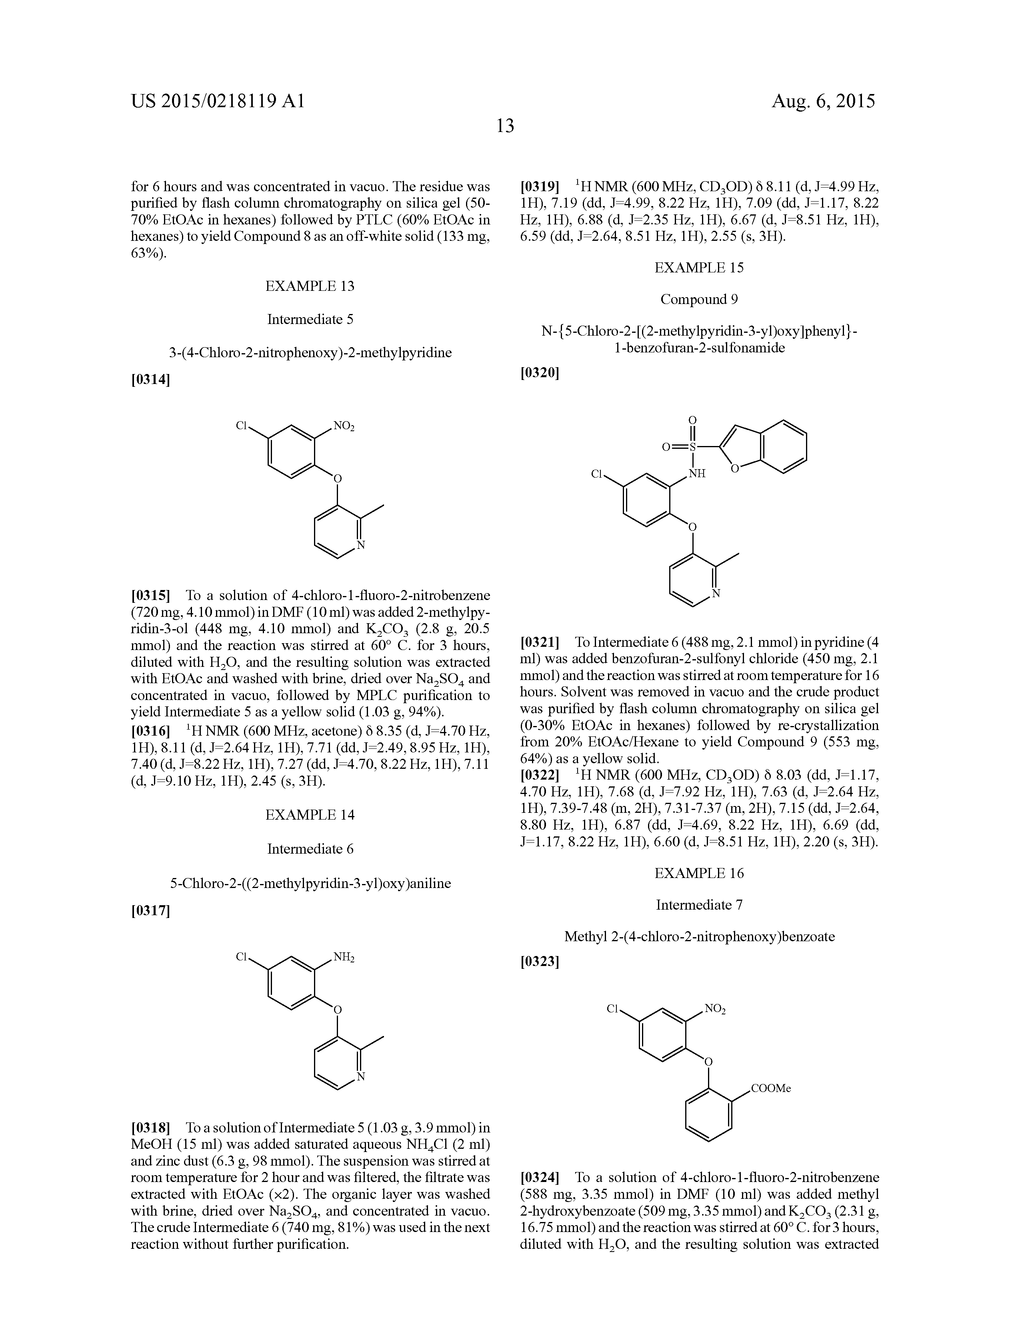 BENZOFURAN-2-SULFONAMIDES DERIVATIVES AS CHEMOKINE RECEPTOR MODULATORS - diagram, schematic, and image 14